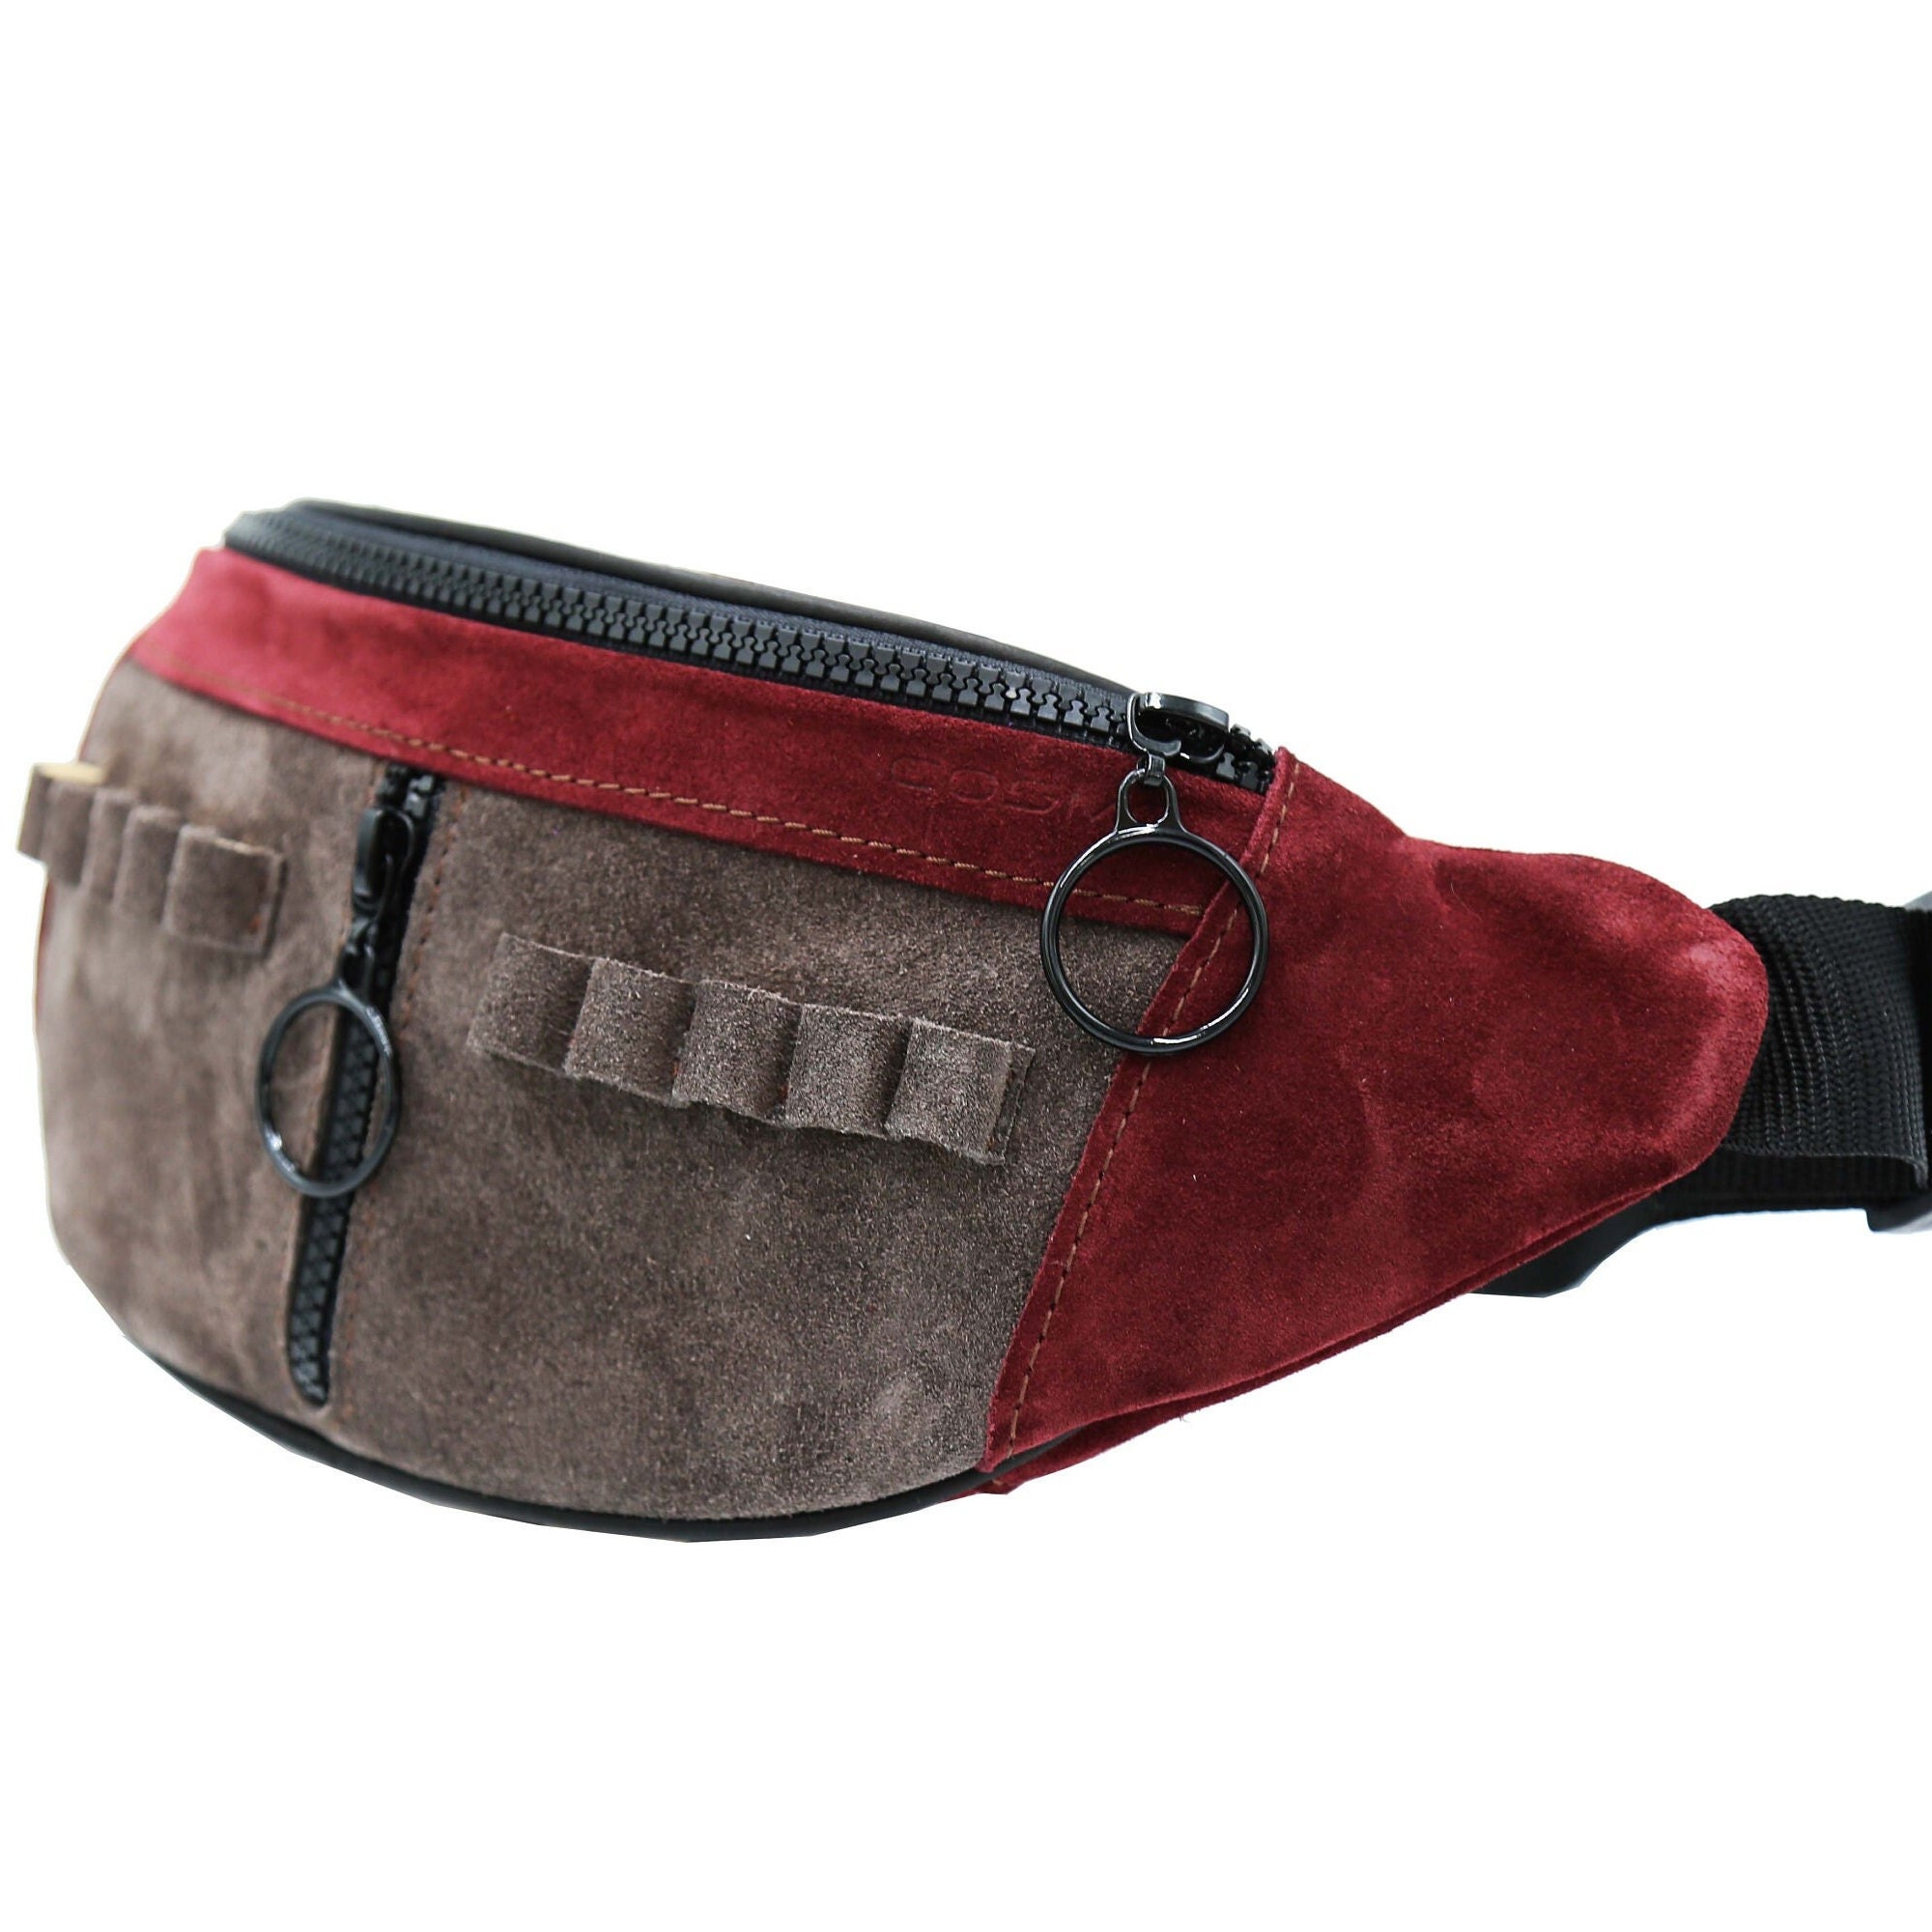 Chokha bag, Purple fanny pack, Designer belt bag by COSMO